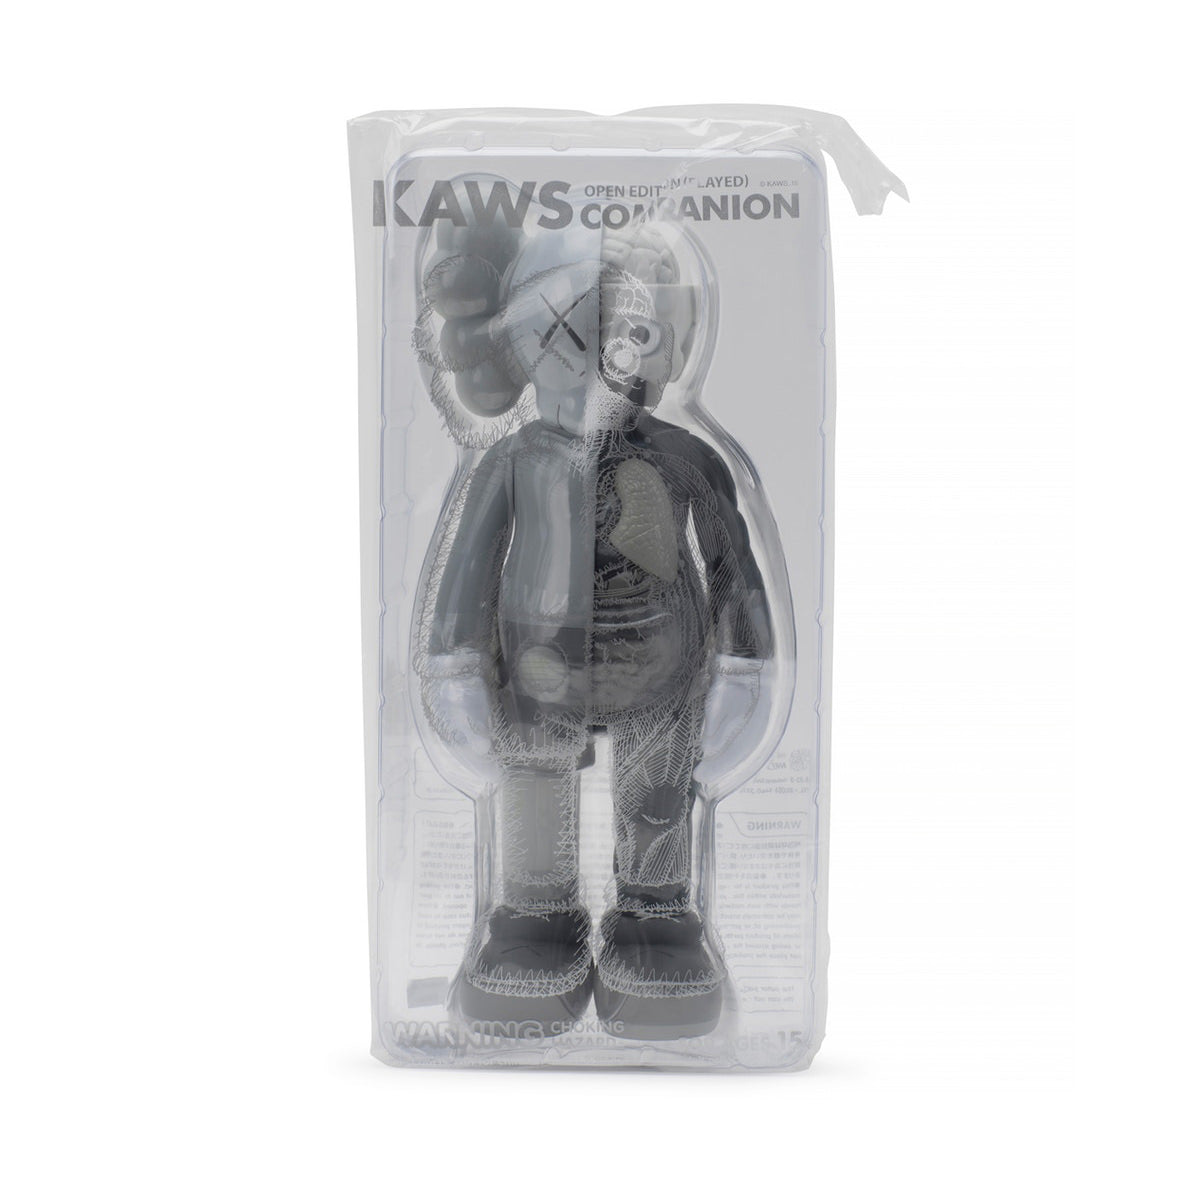 KAWS, Companion Flayed Open Edition Vinyl Figure Grey, 2016